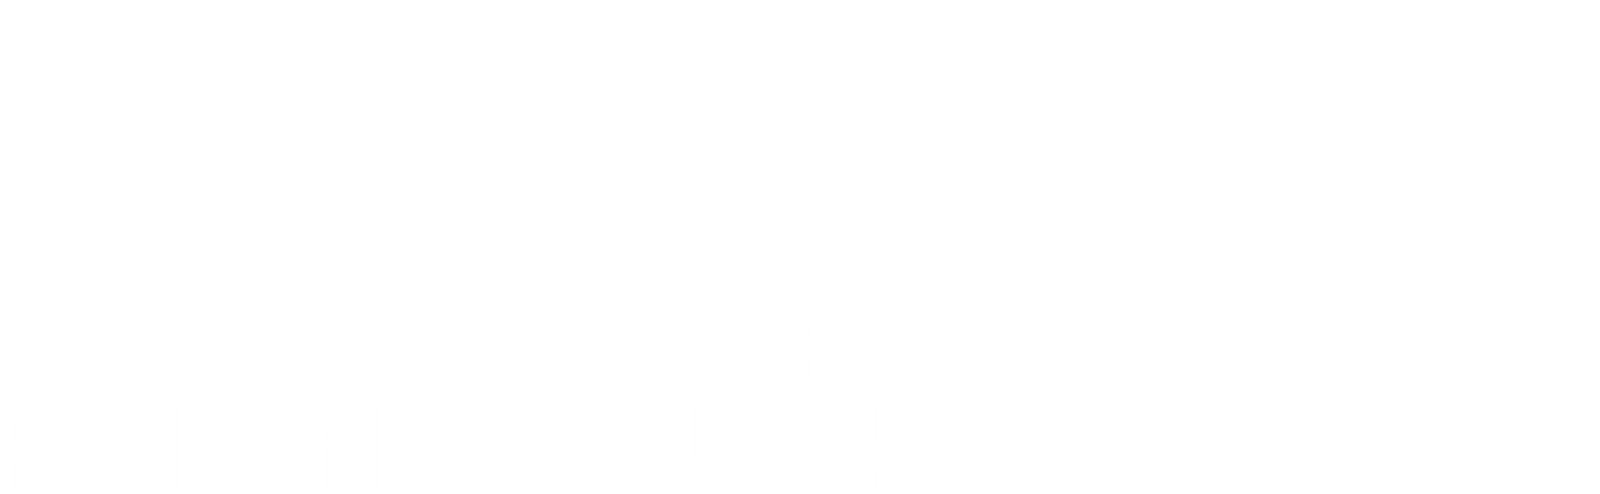 Premier Junk Removal